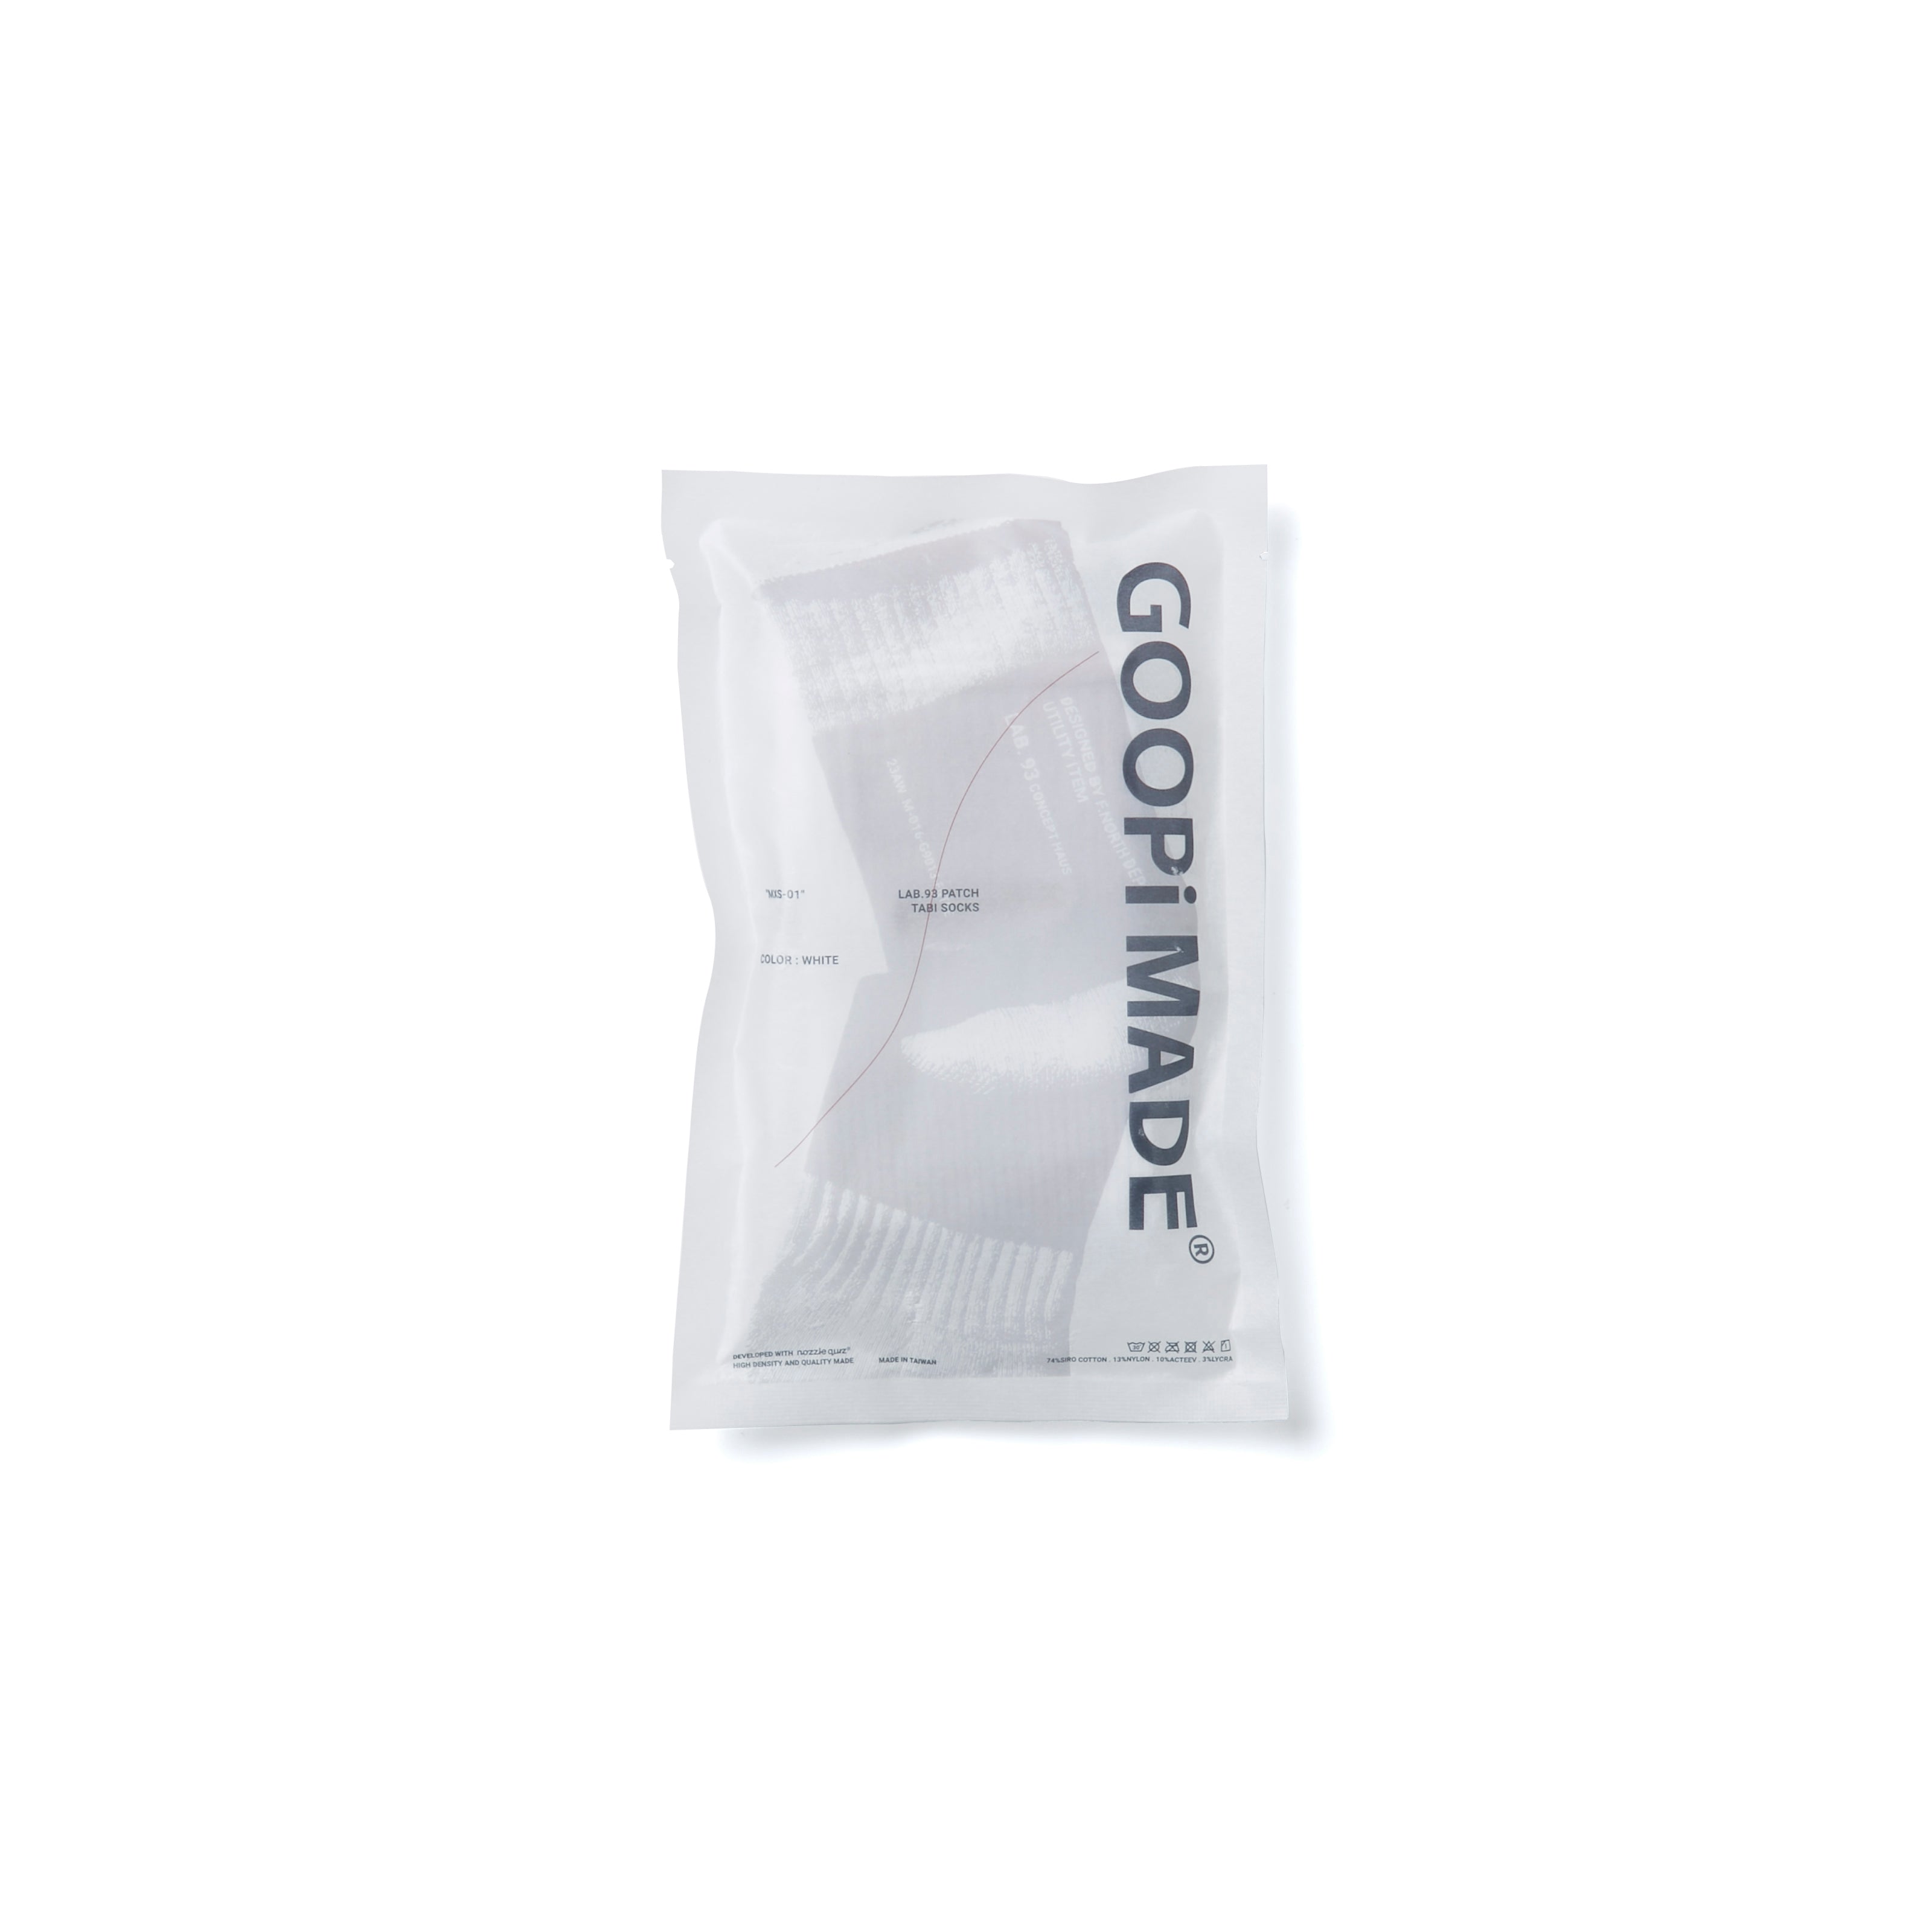 GOOPiMADE - "MXS-01" Lab.93 Patch Tabi Socks - White